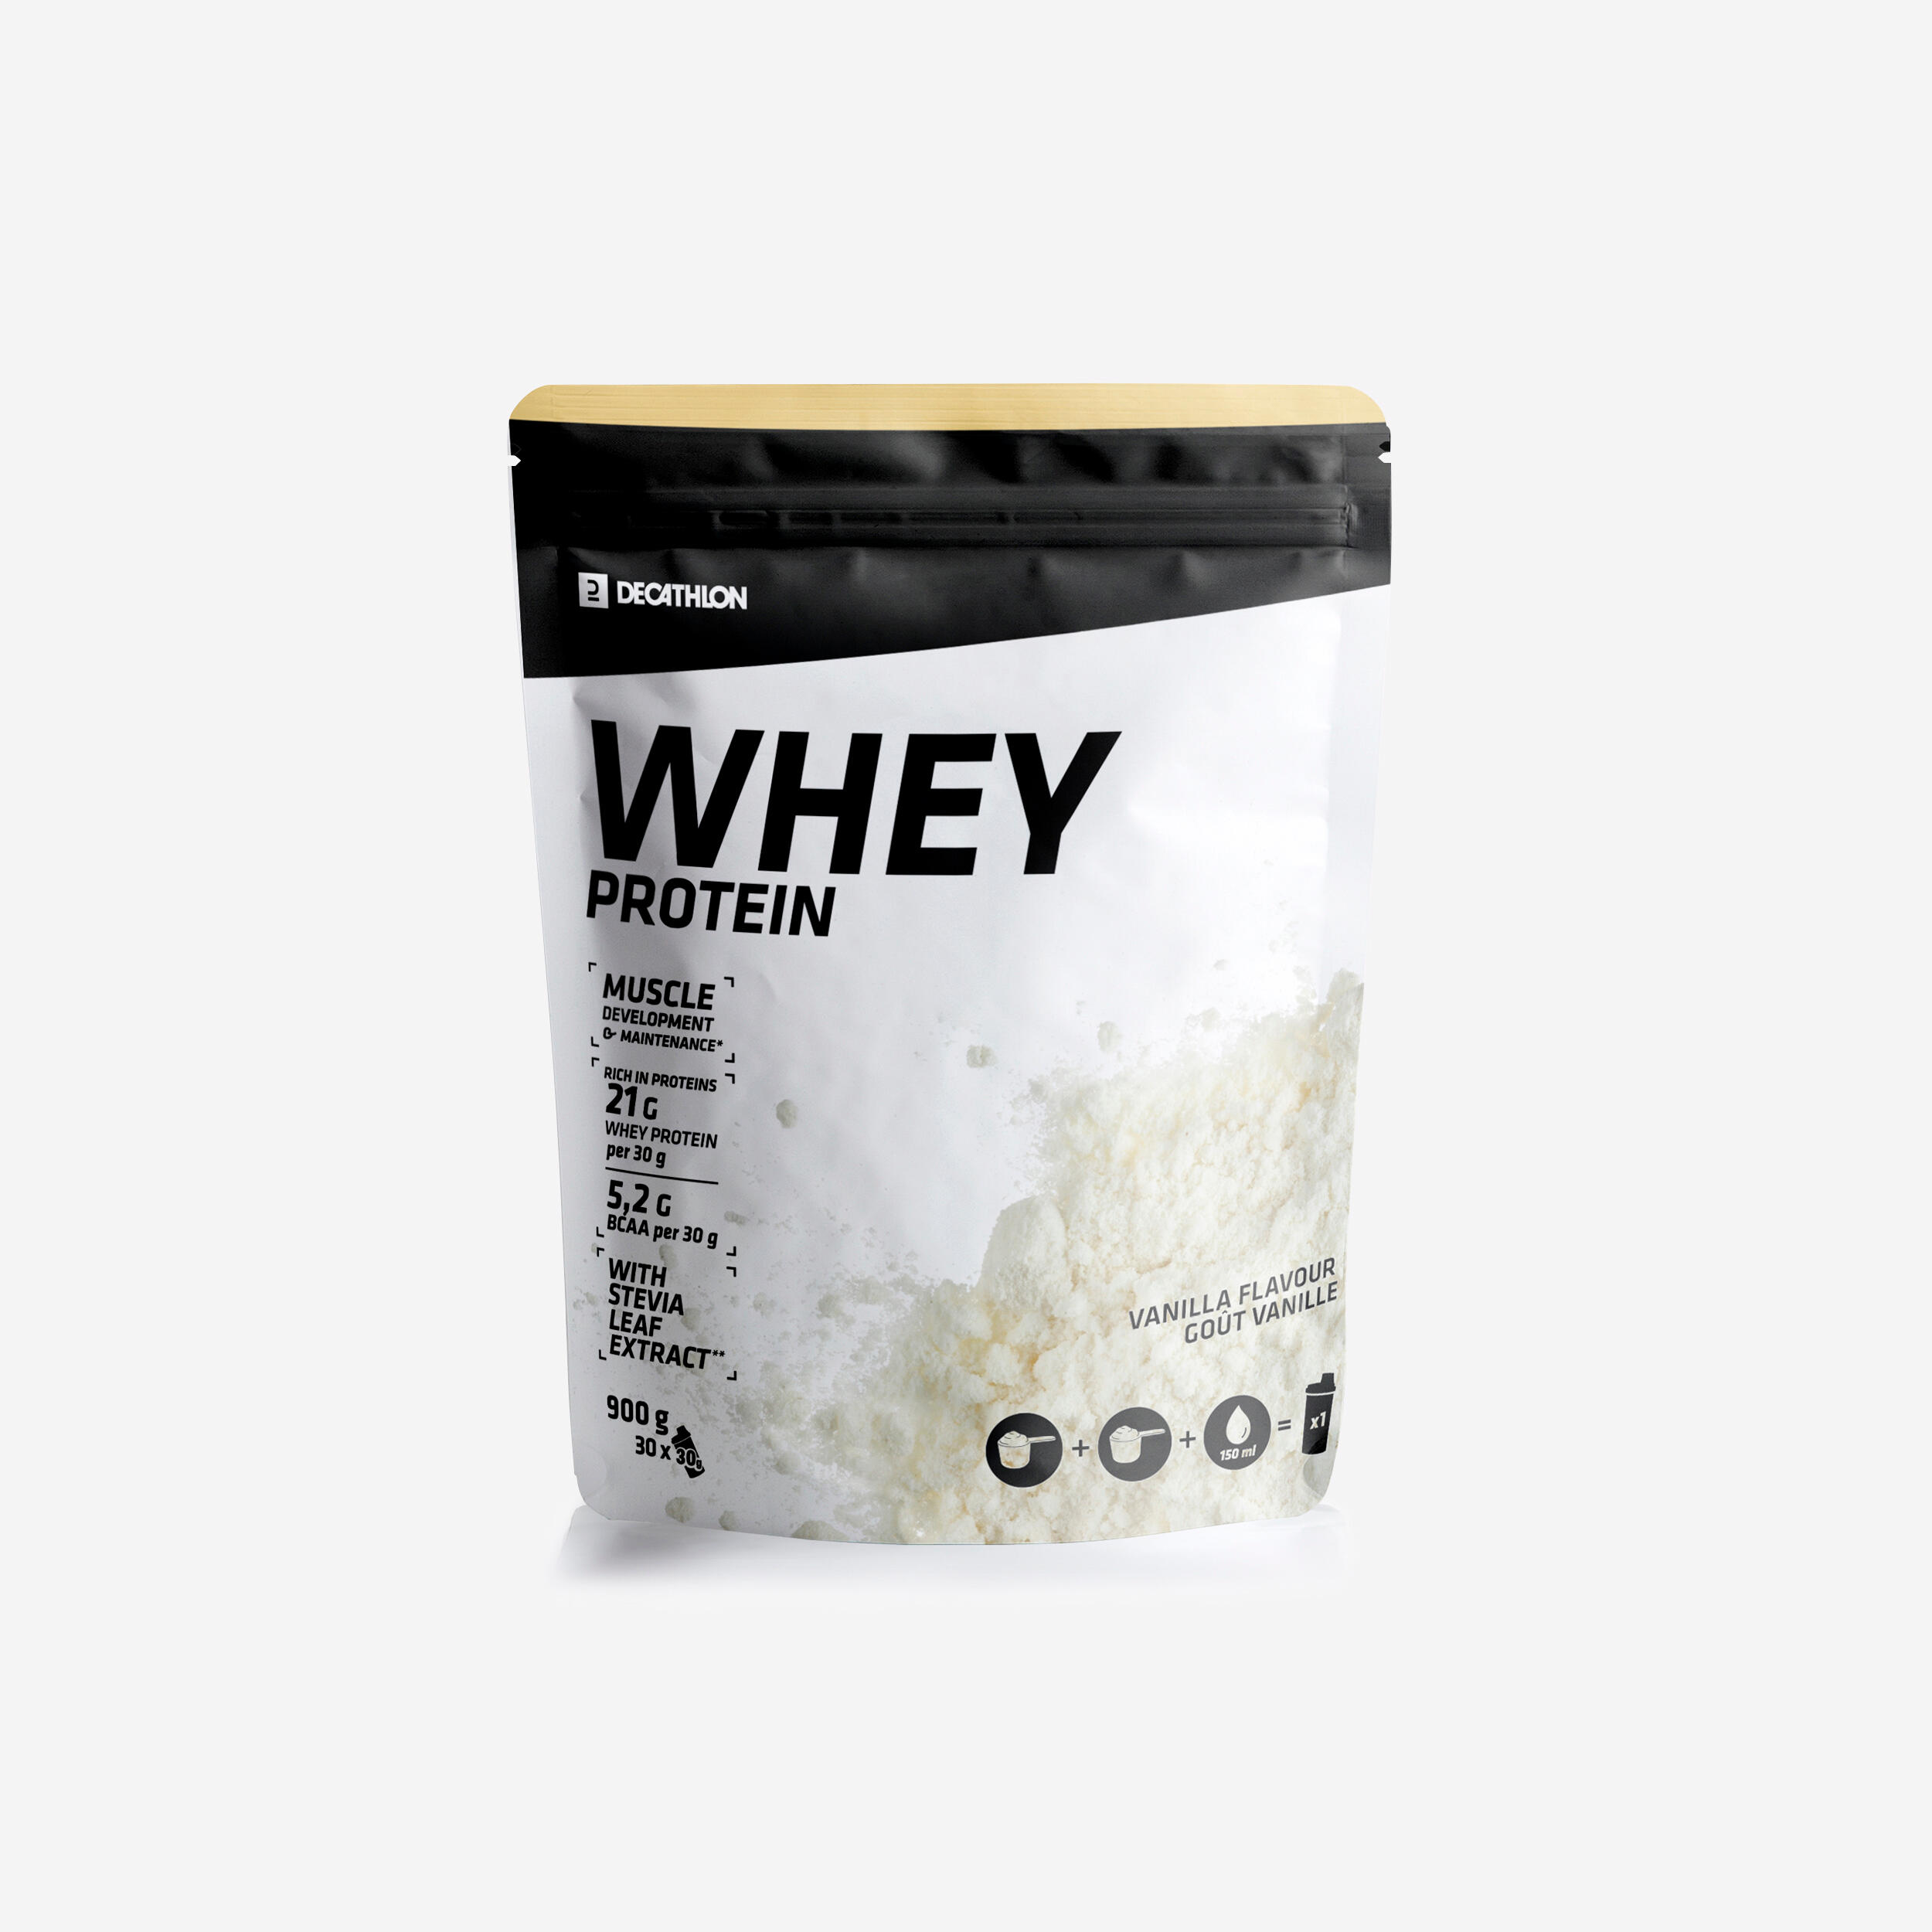 CORENGTH Whey Protein 900 g Vanilla